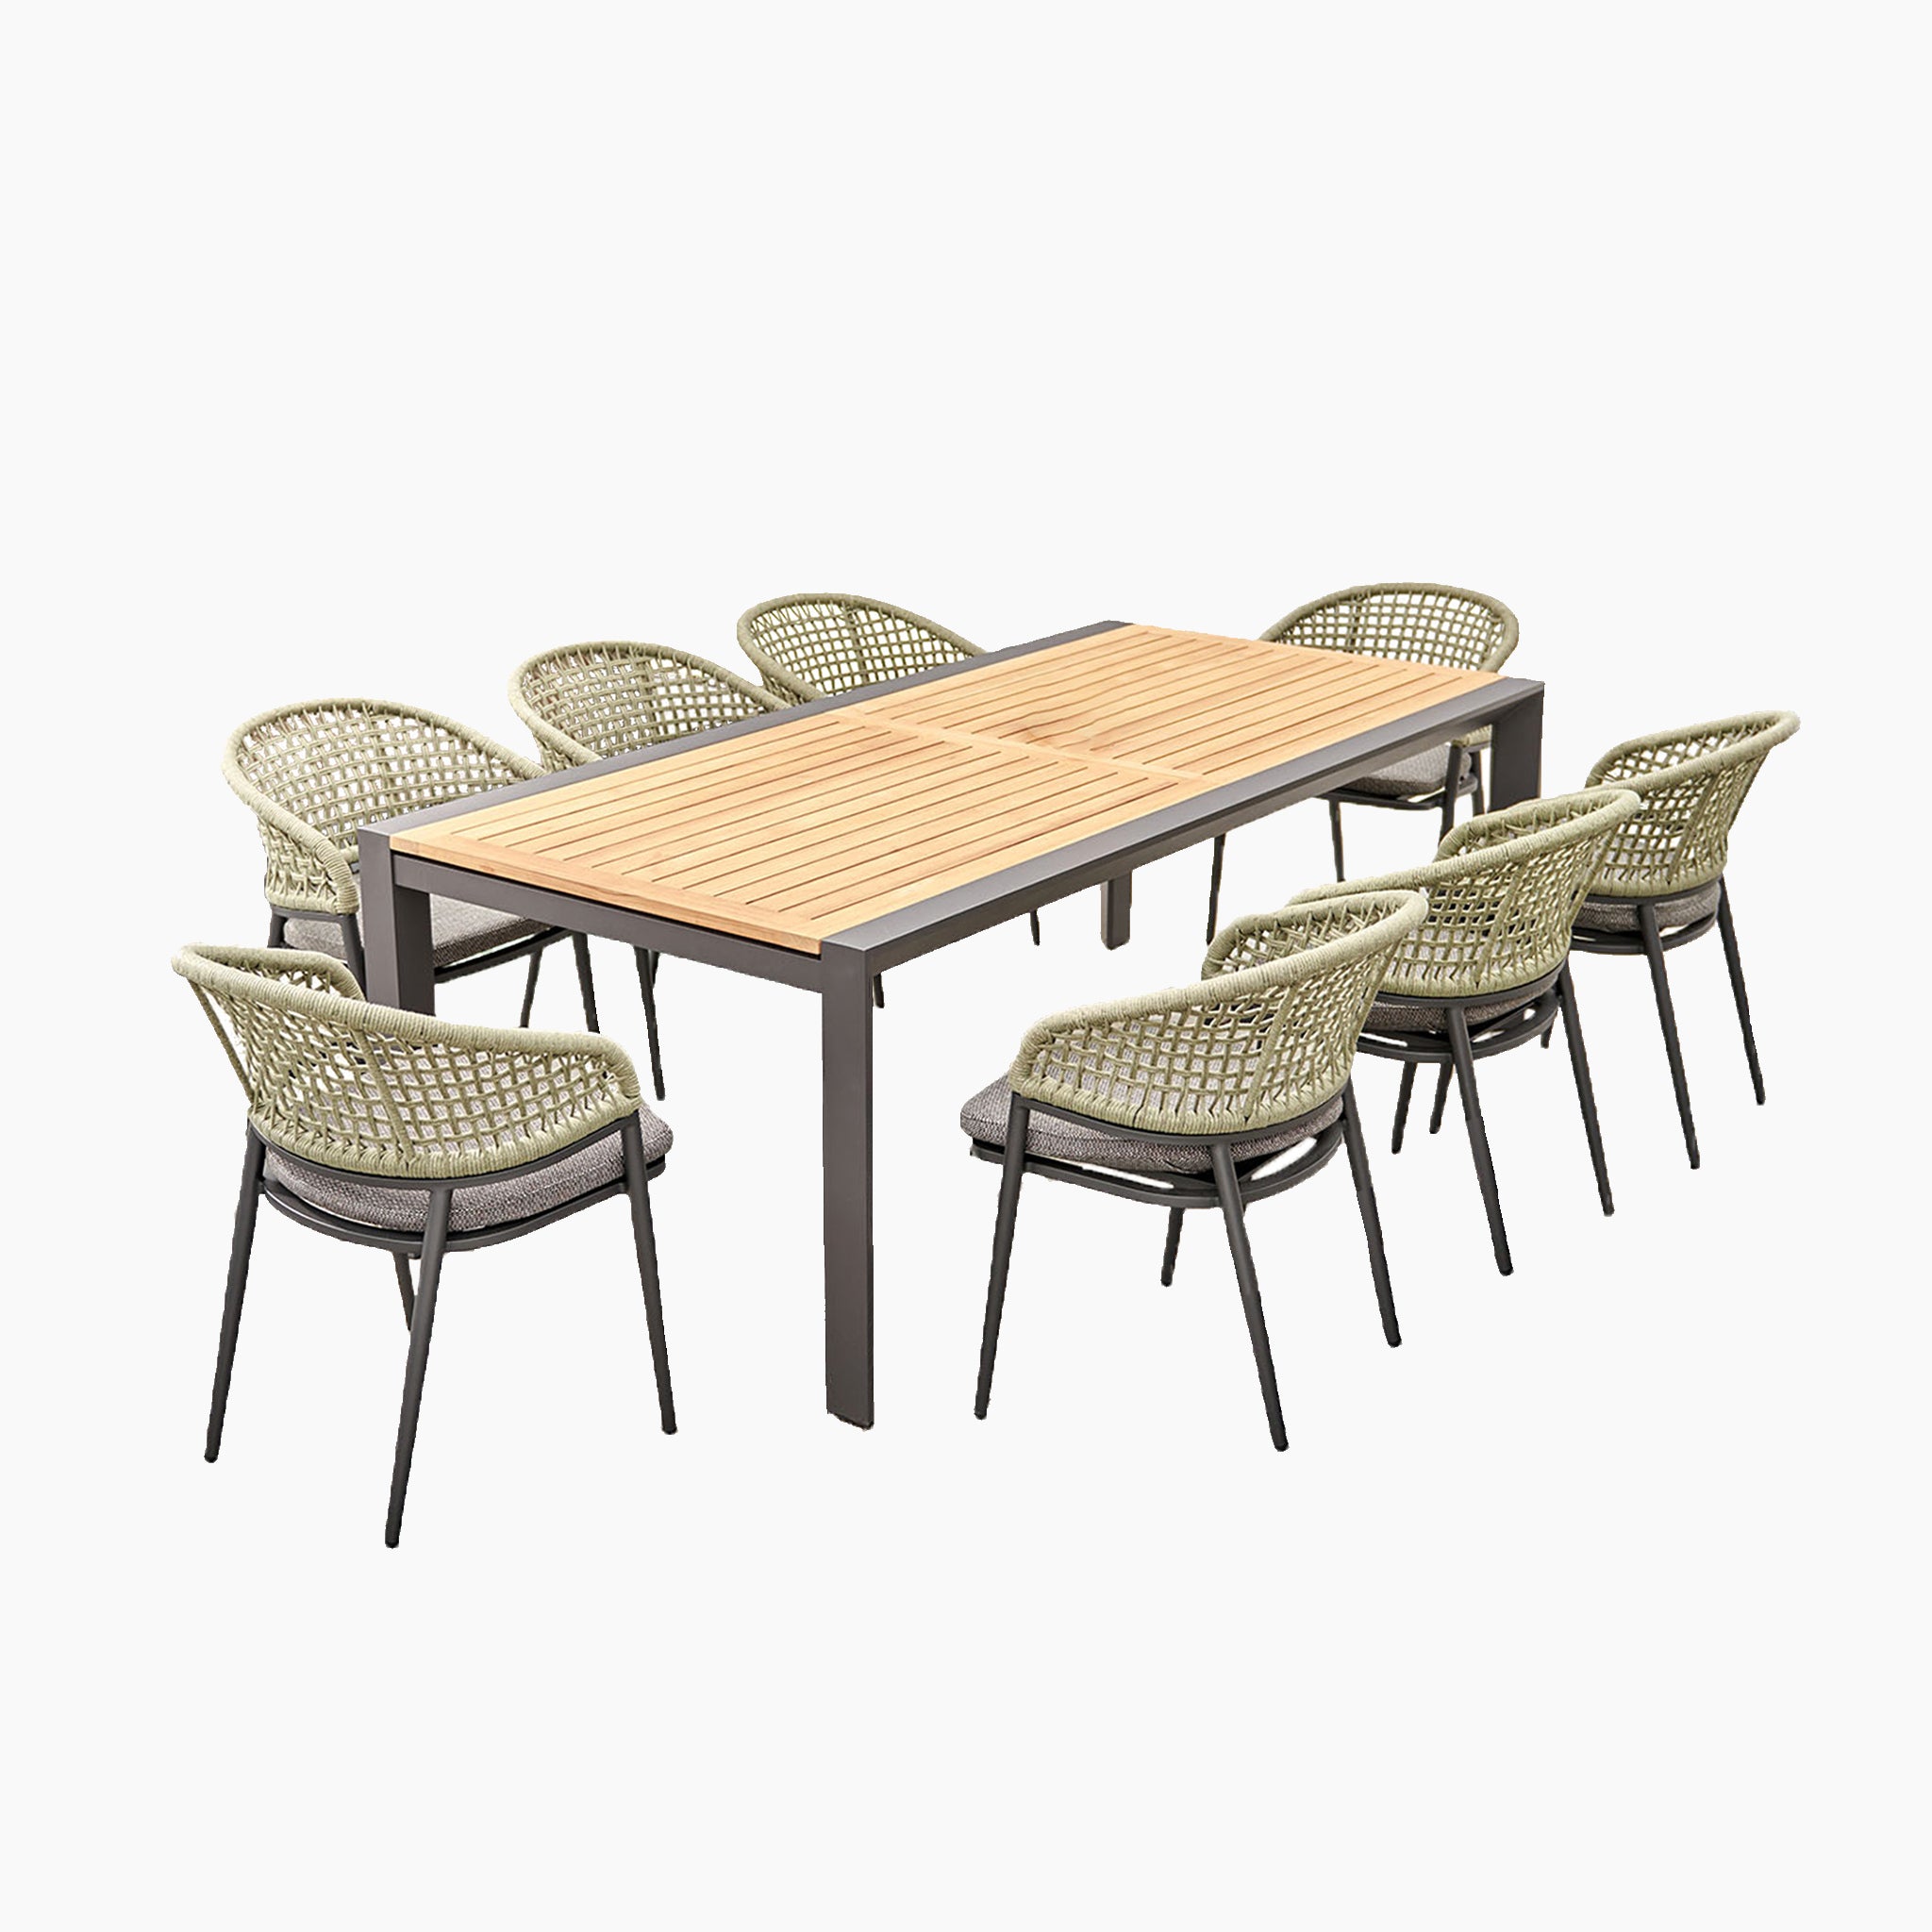 Kalama 10 Seat Rectangular Extending Dining Set with Teak Table in Olive Green